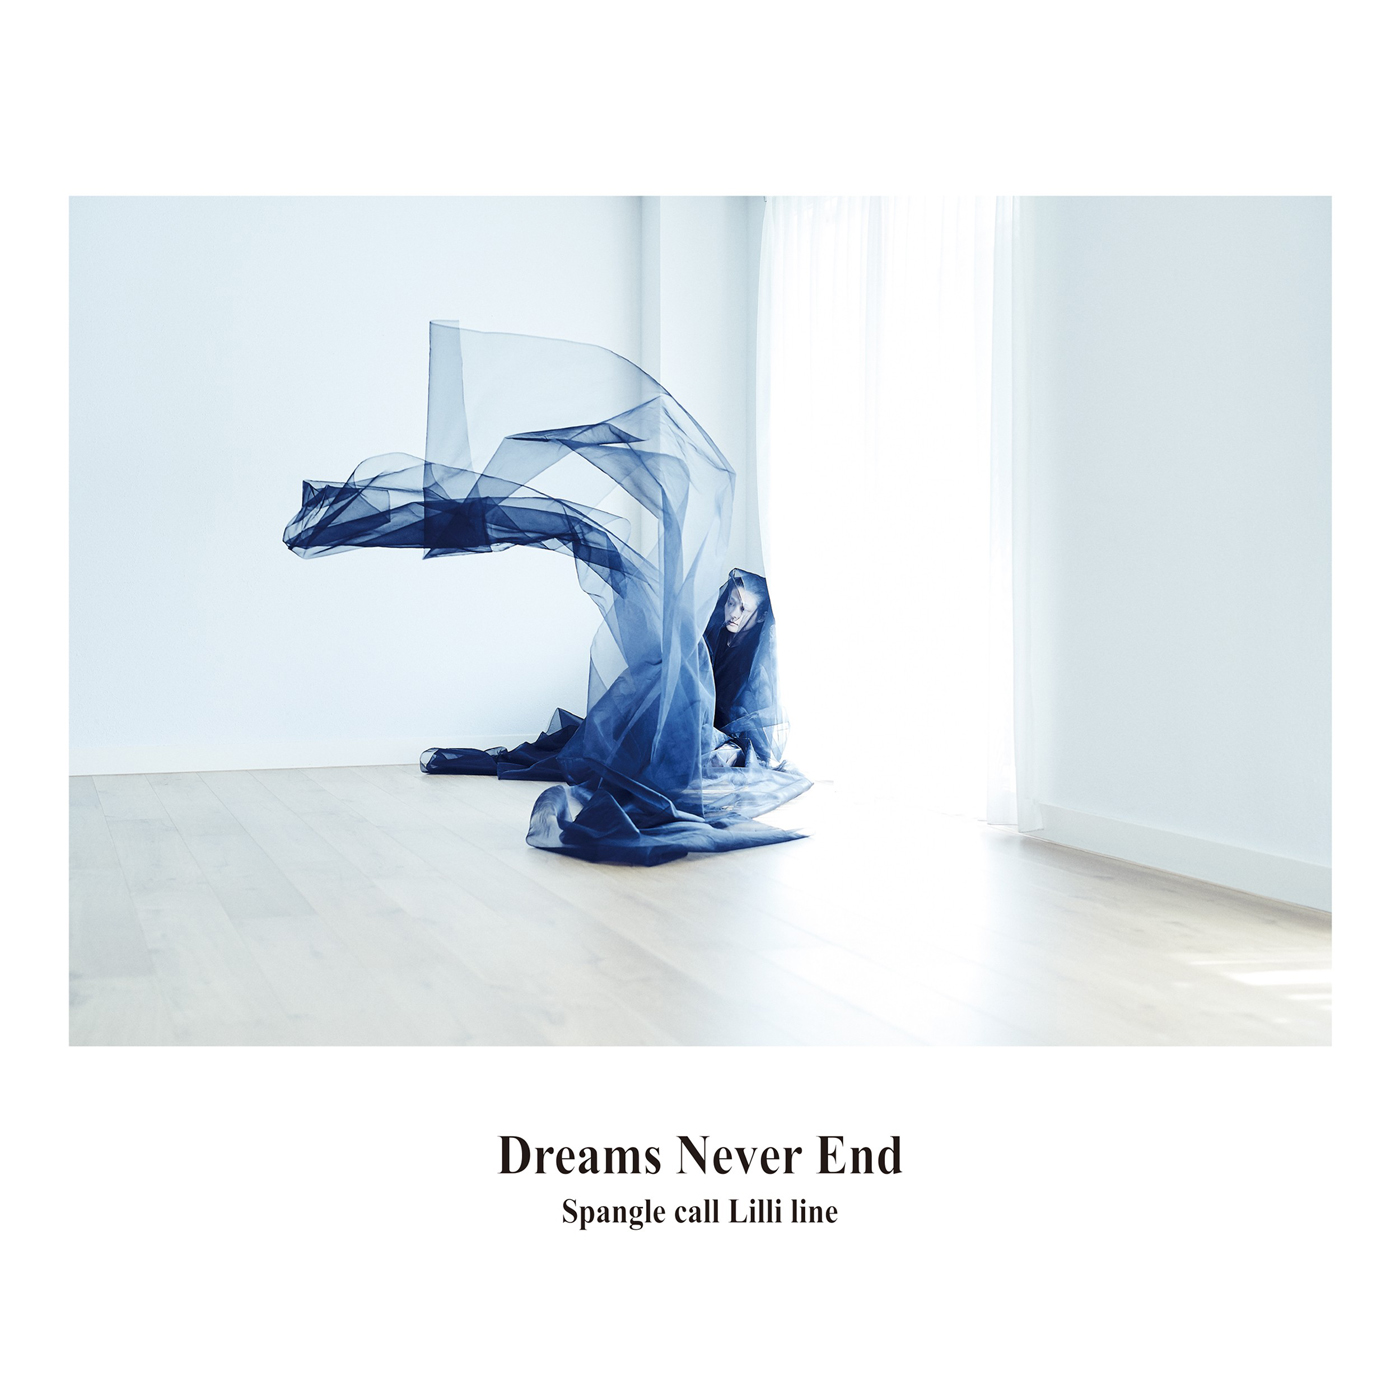 20190109.0740.4 Spangle call Lilli line - Dreams Never End (FLAC) cover.jpg